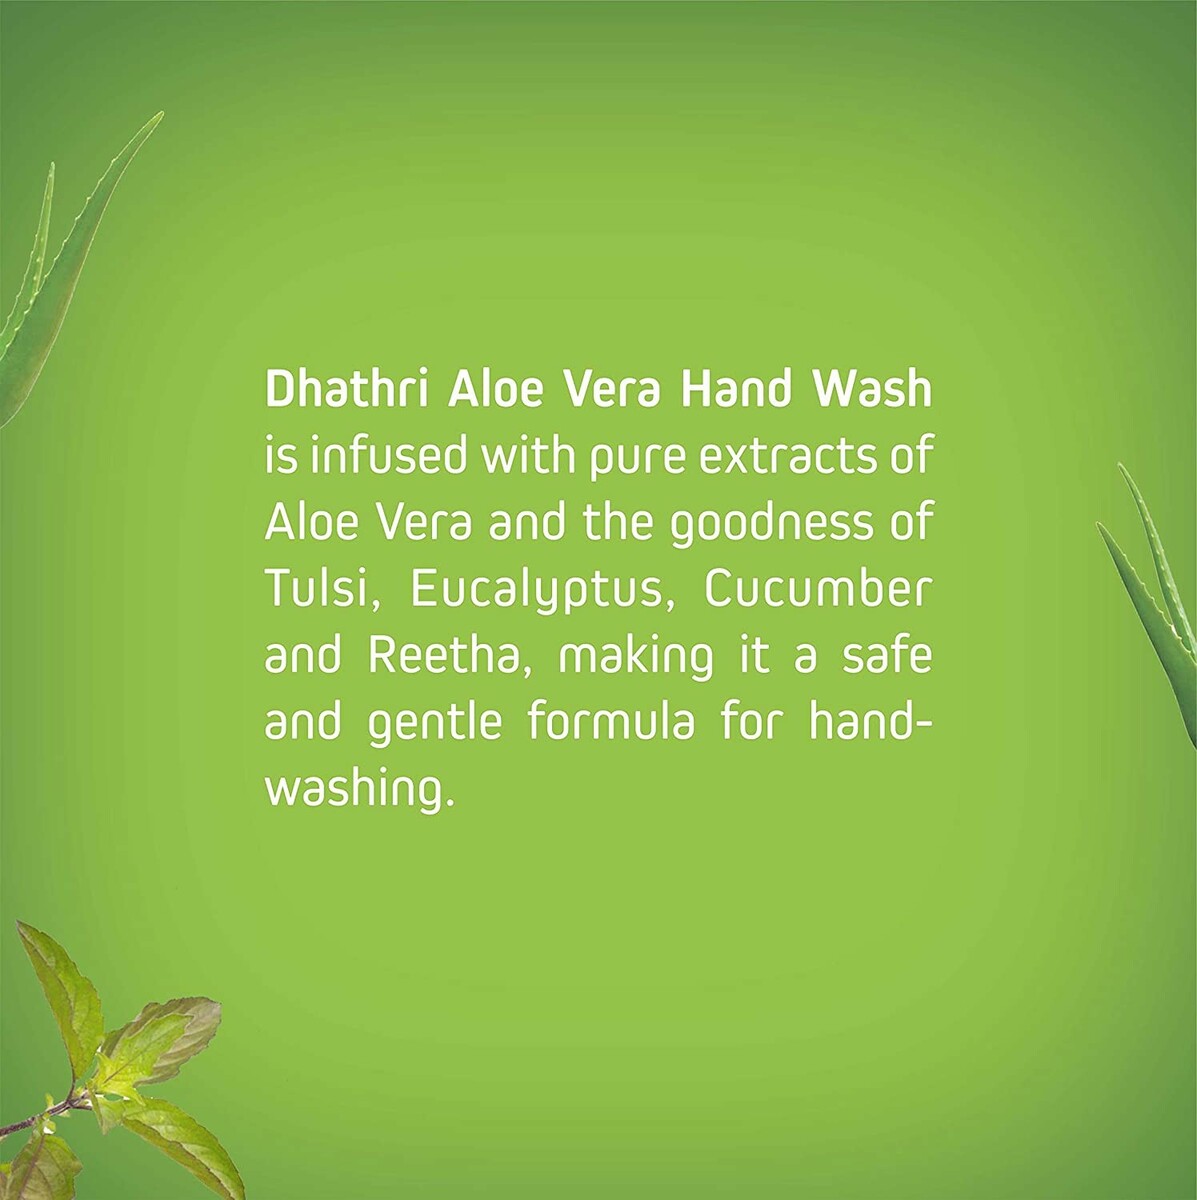 Dhathri Moisturizing  Aloe Vera Hand Wash 250ml